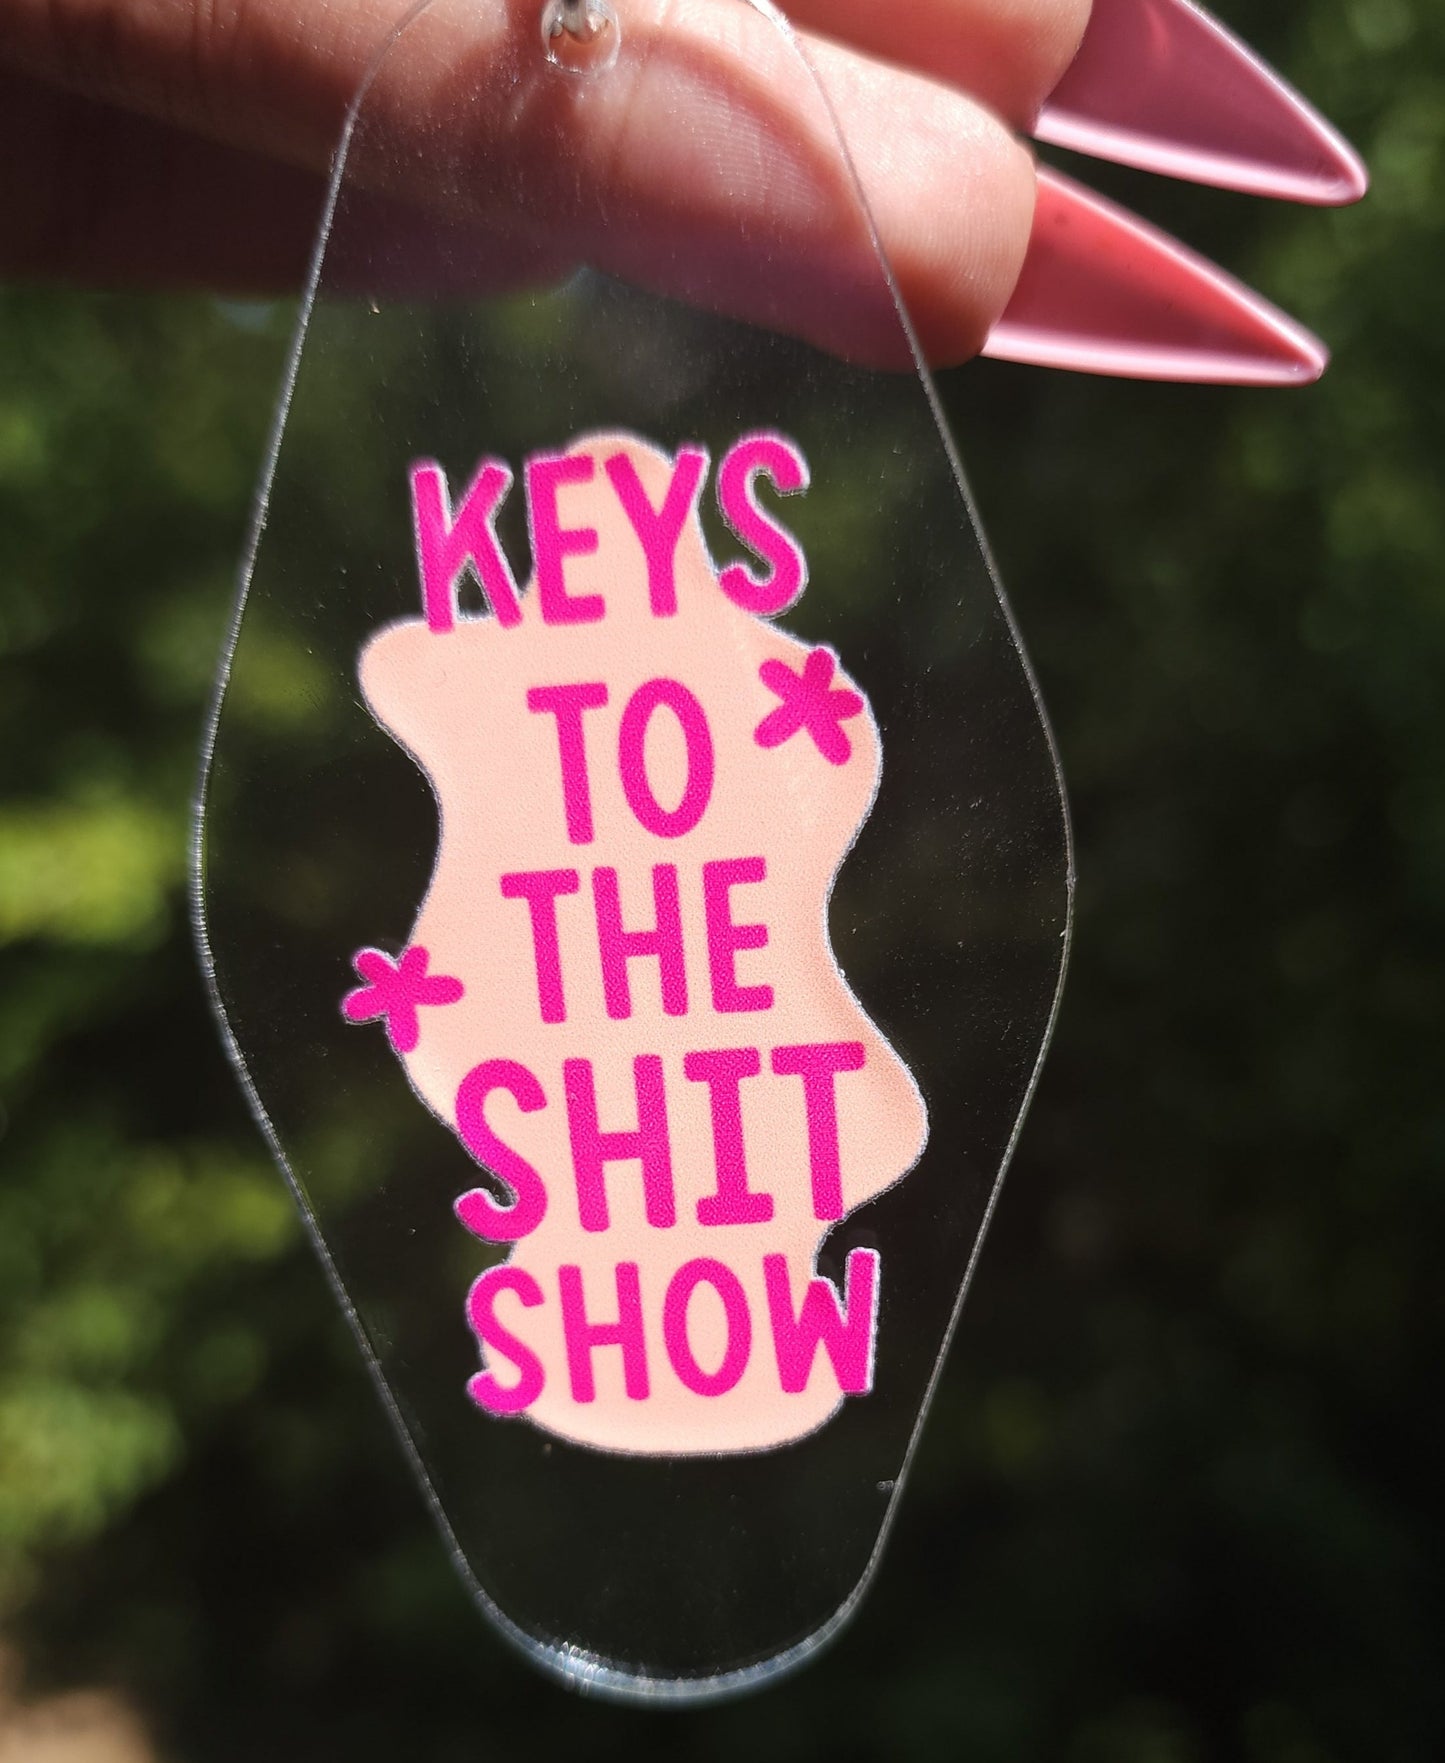 The Show Keychain